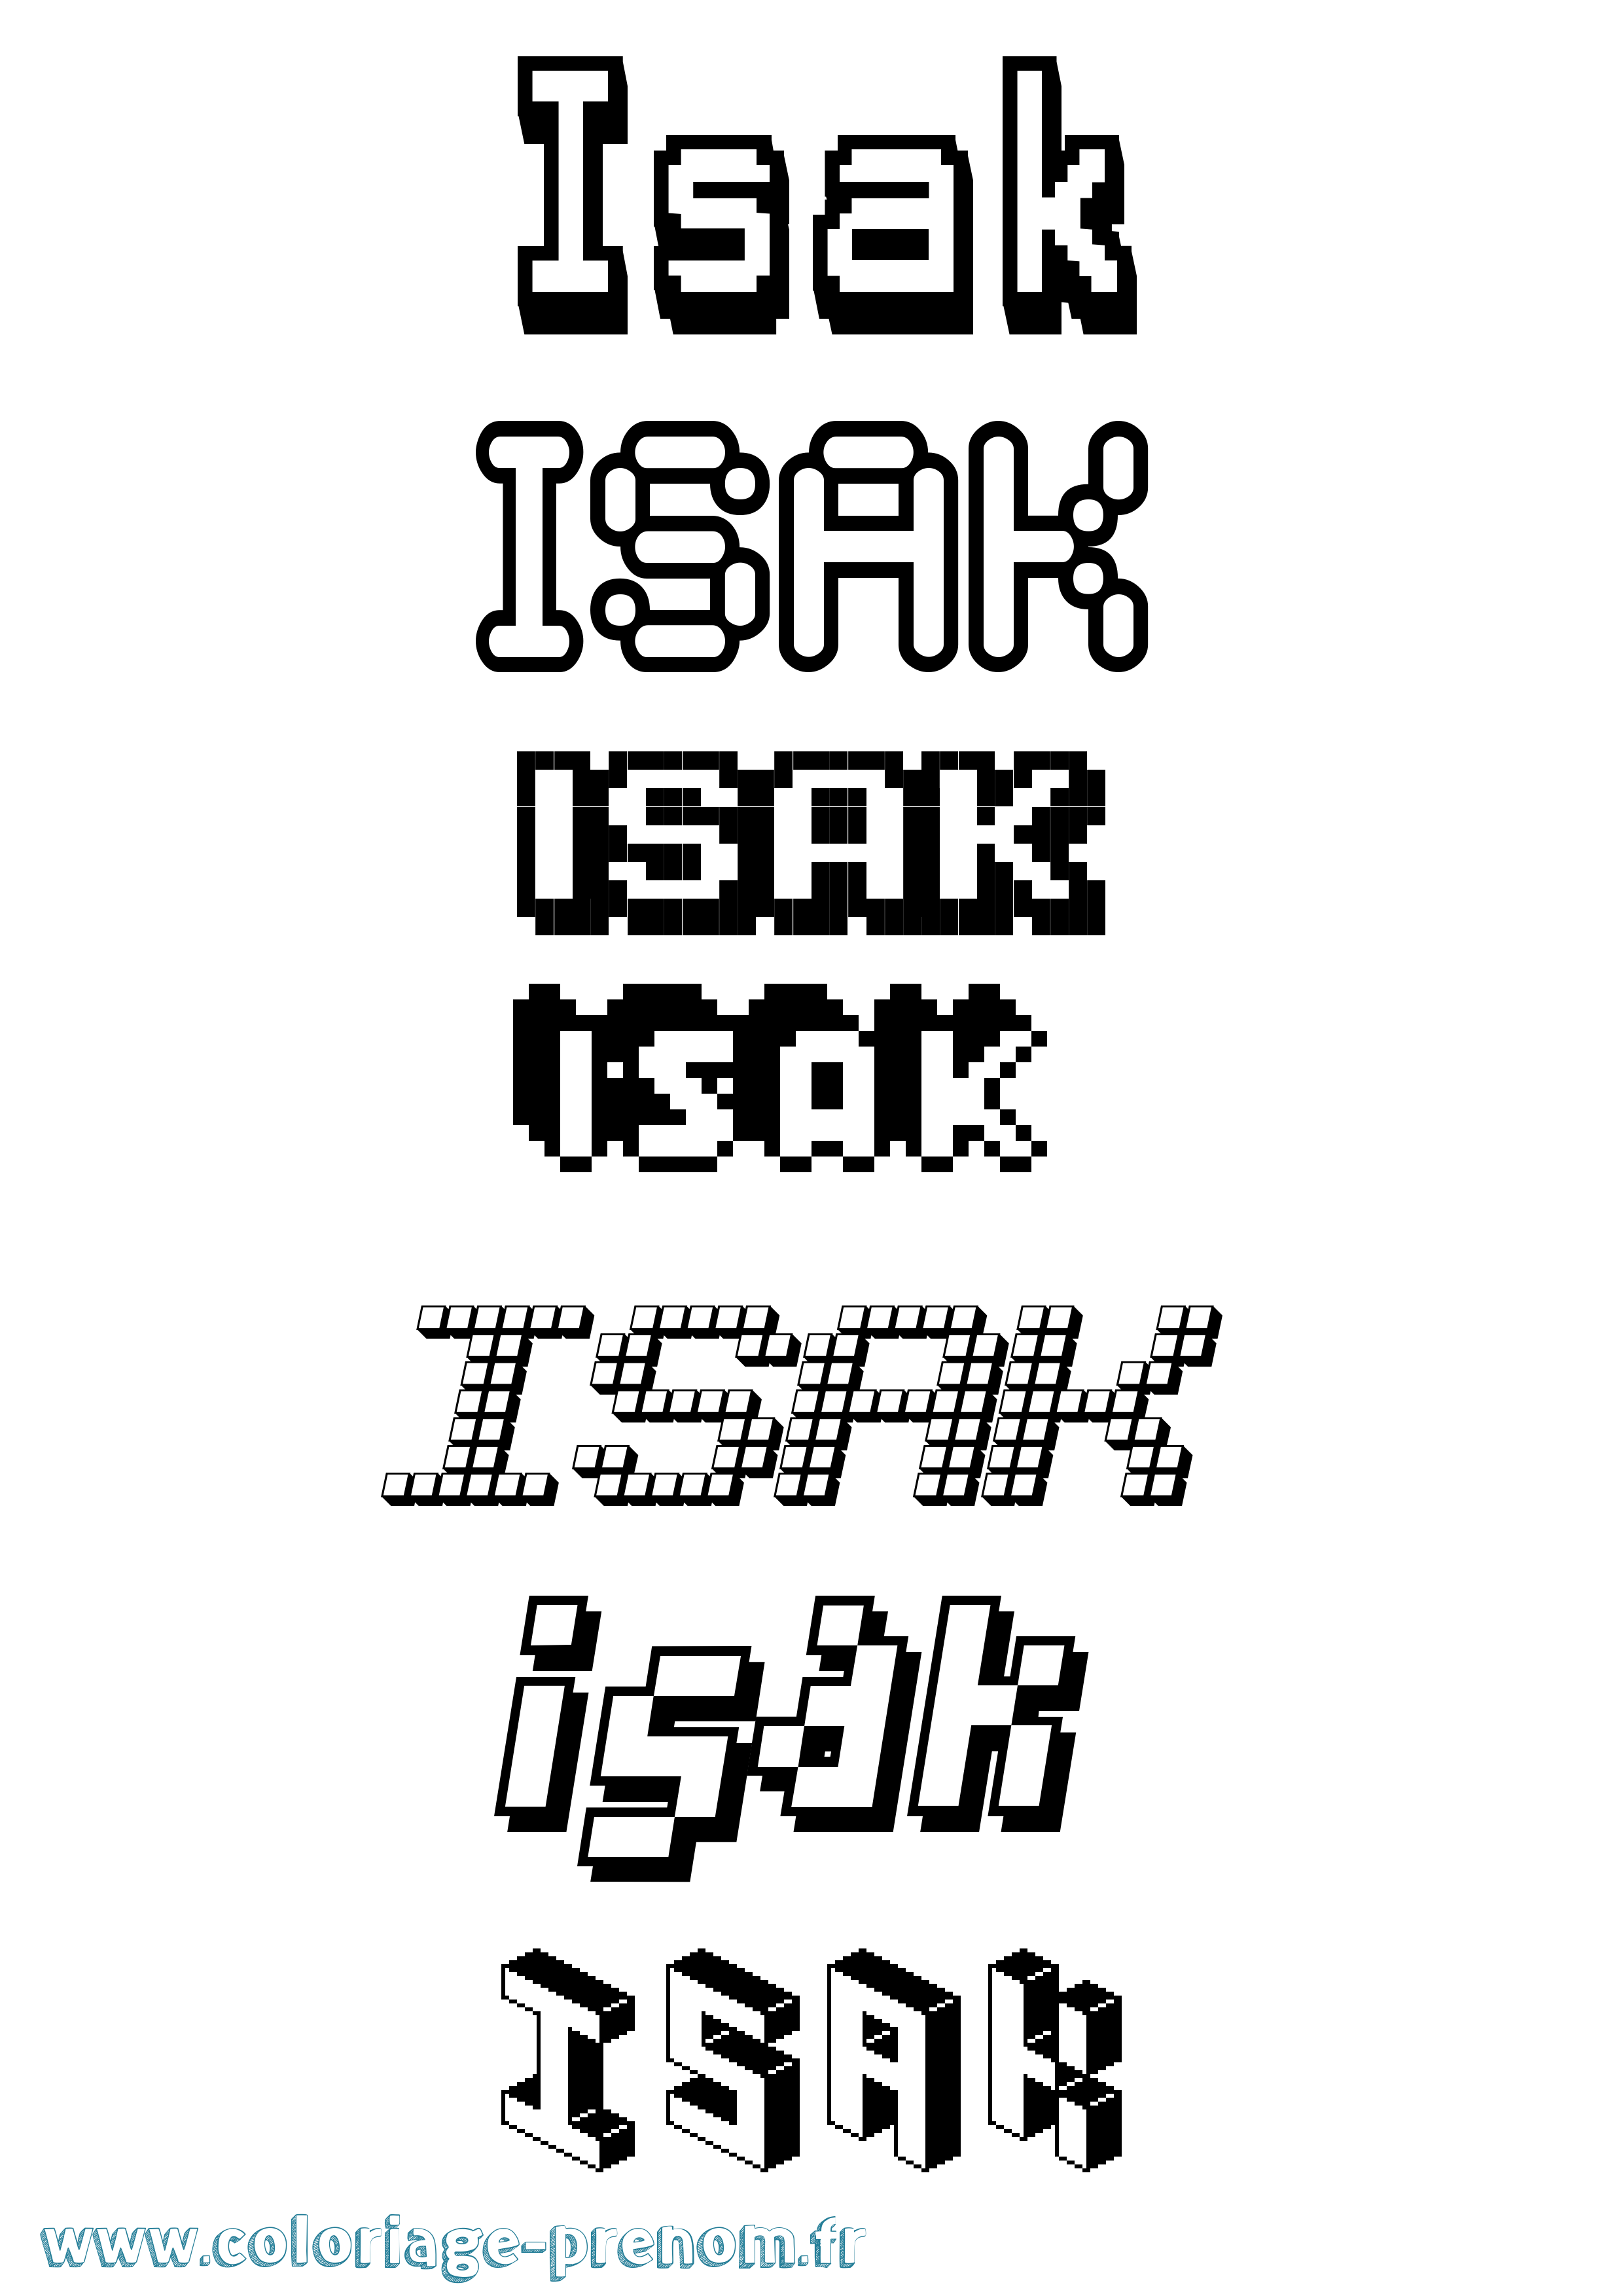 Coloriage prénom Isak Pixel